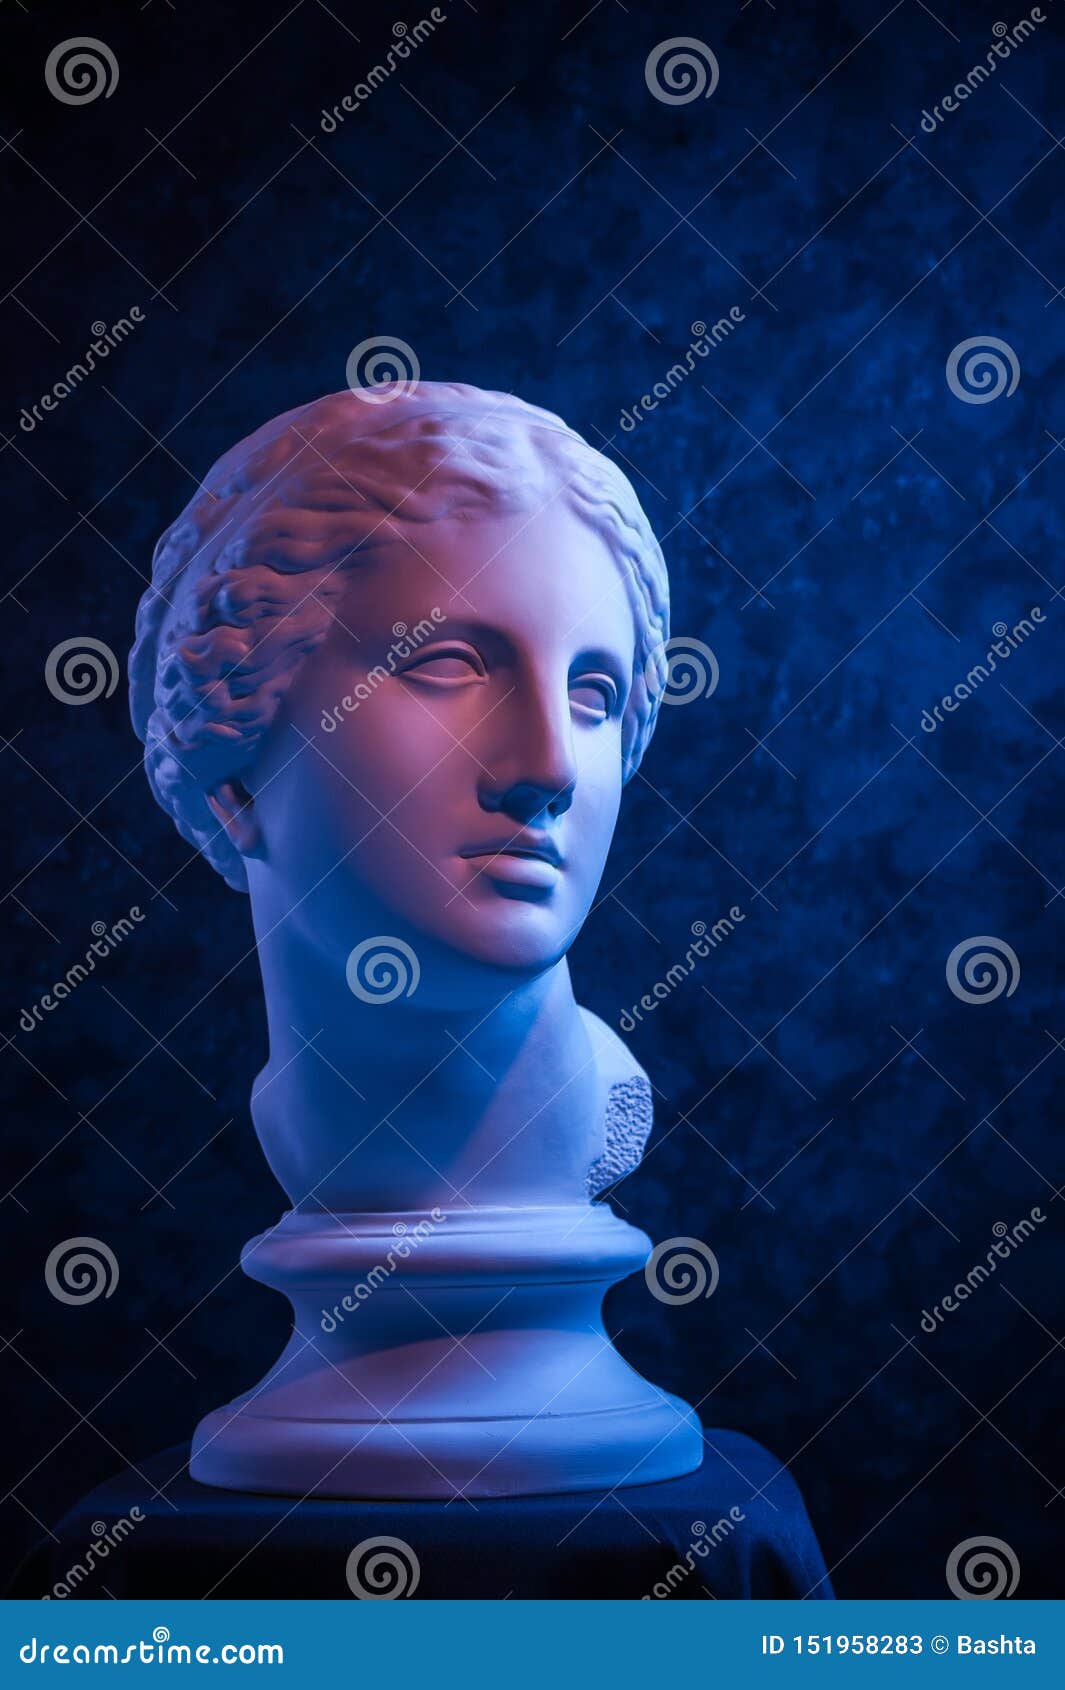 gypsum copy of ancient statue venus head on a dark blue textured background. plaster sculpture woman face.